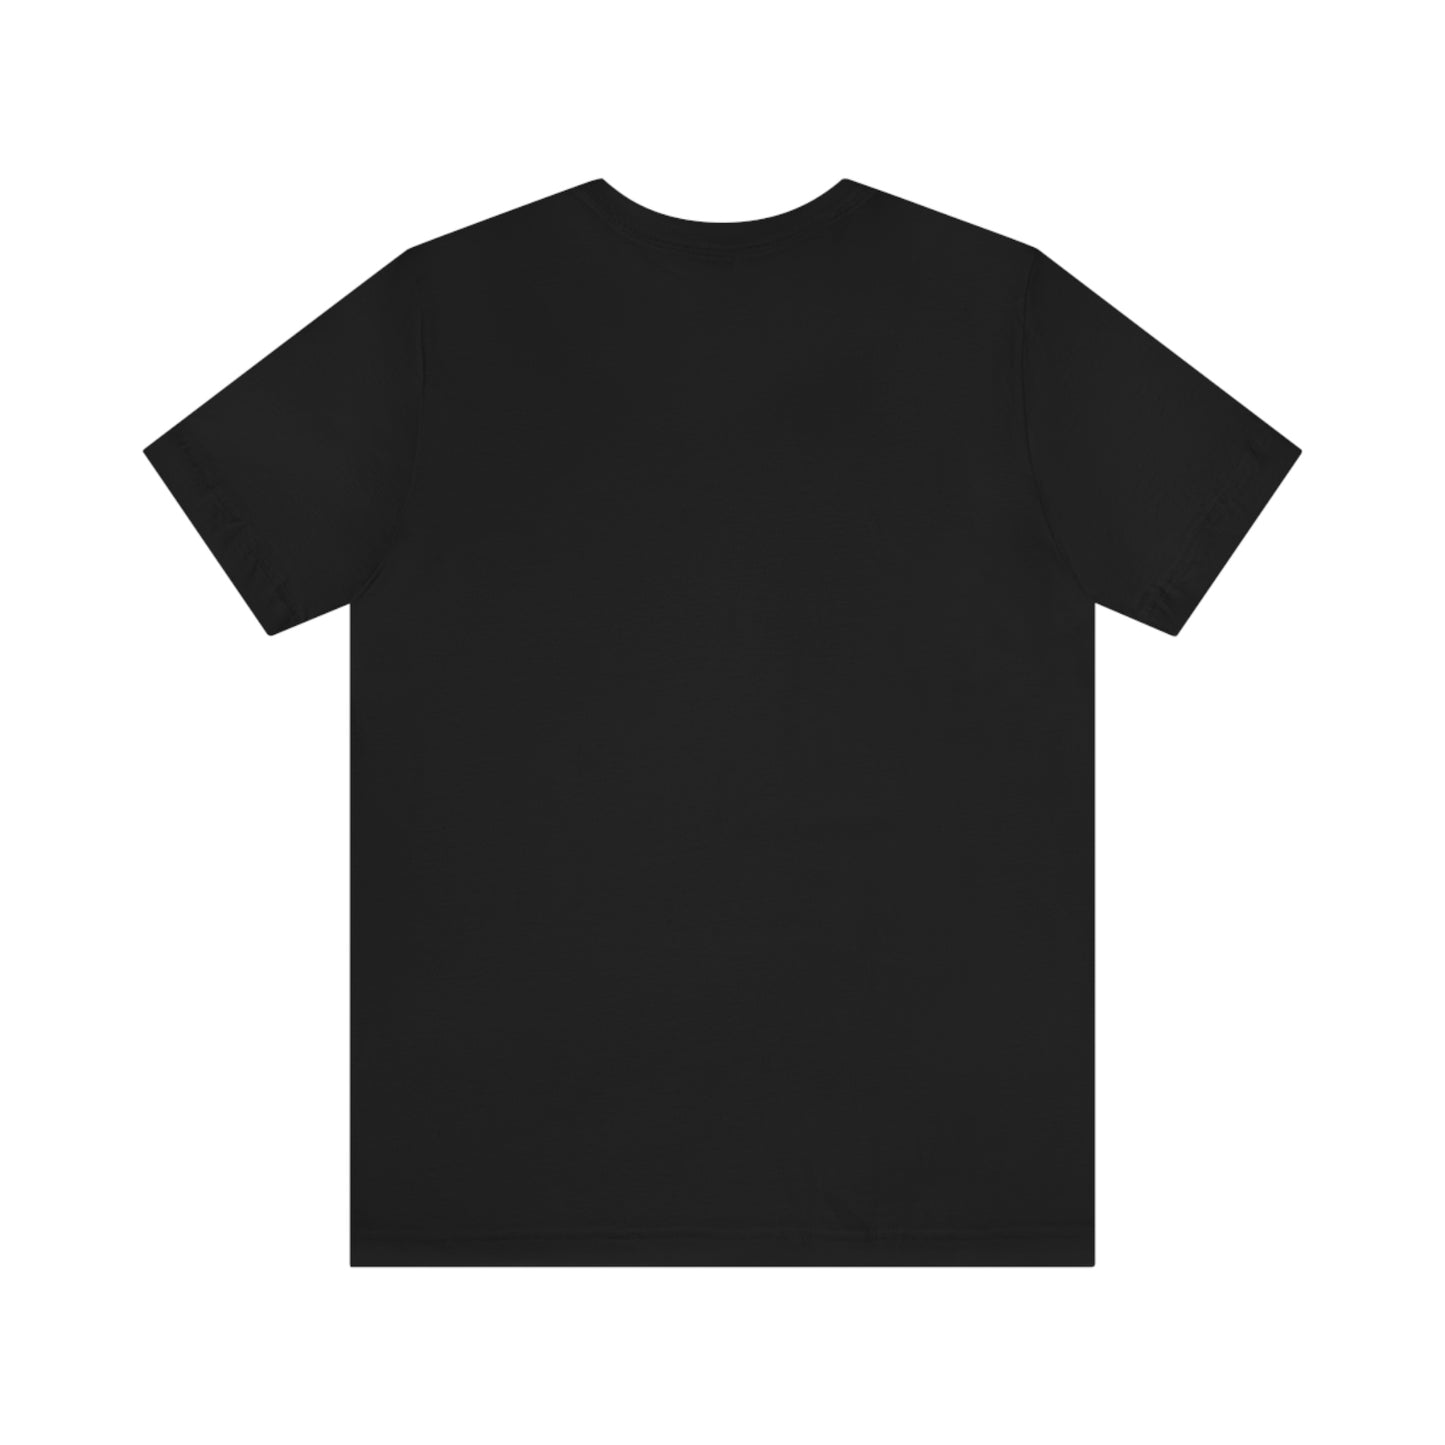 Zack Austin Graphic Shirt (Cotton)